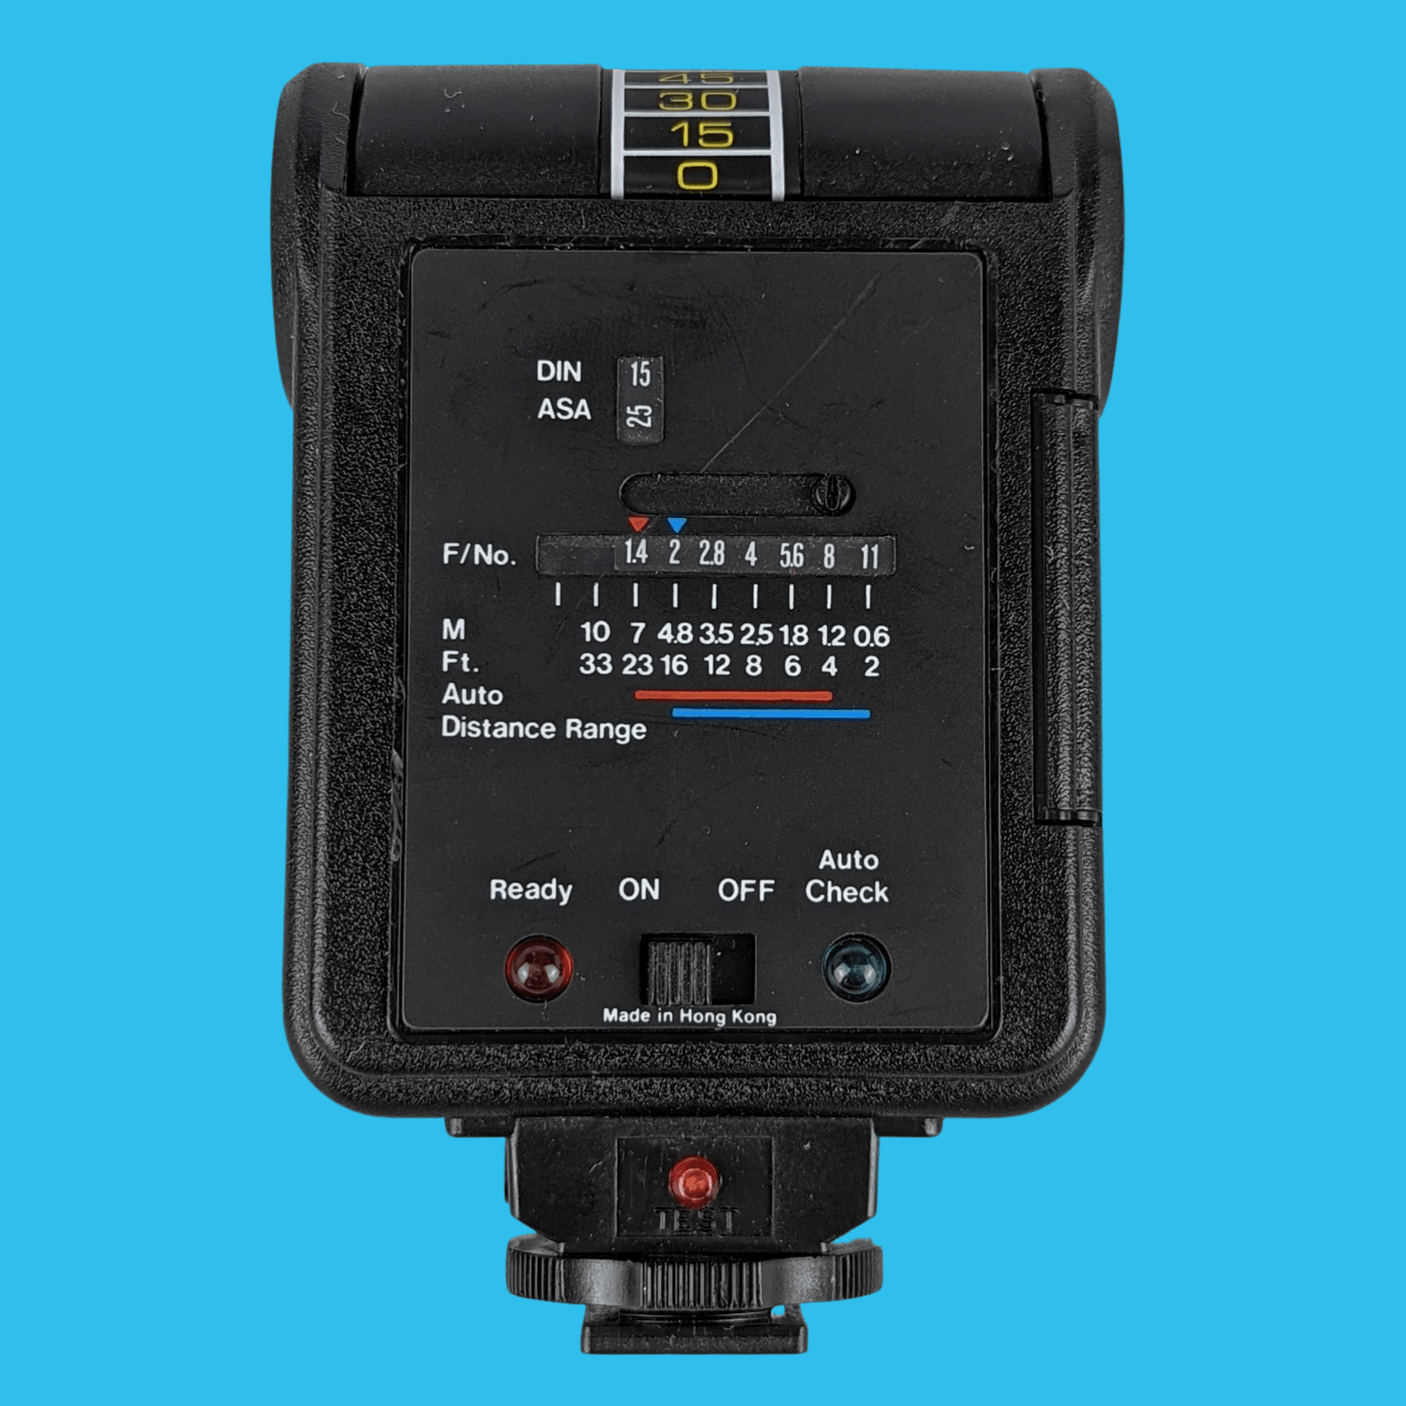 Miranda 500 CD External Flash Unit for 35mm Film Camera